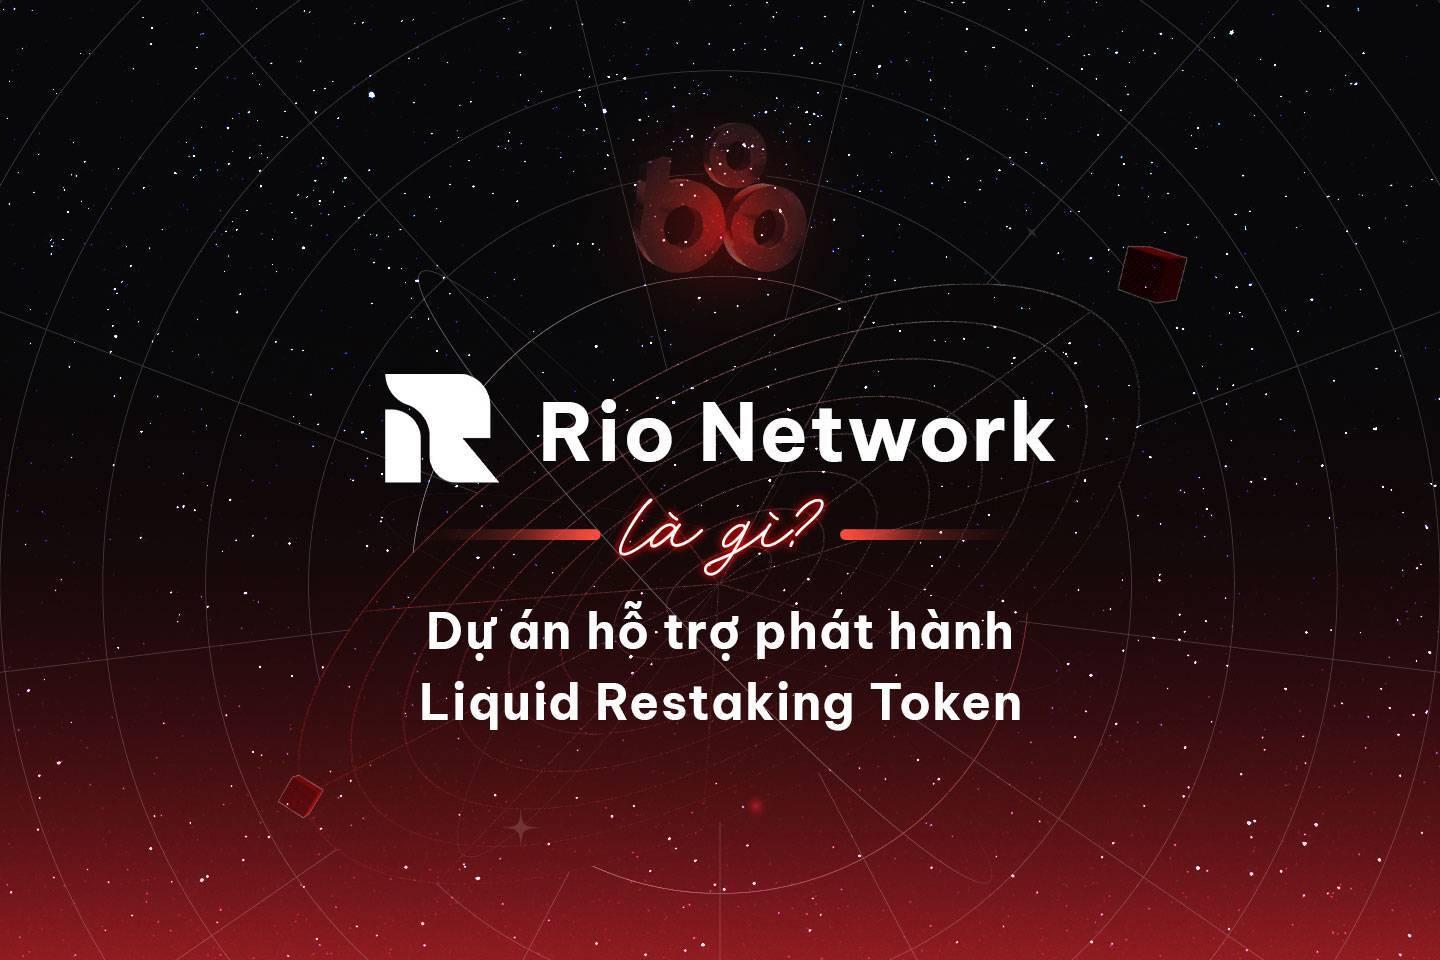 rio-network-la-gi-du-an-ho-tro-phat-hanh-liquid-restaking-token